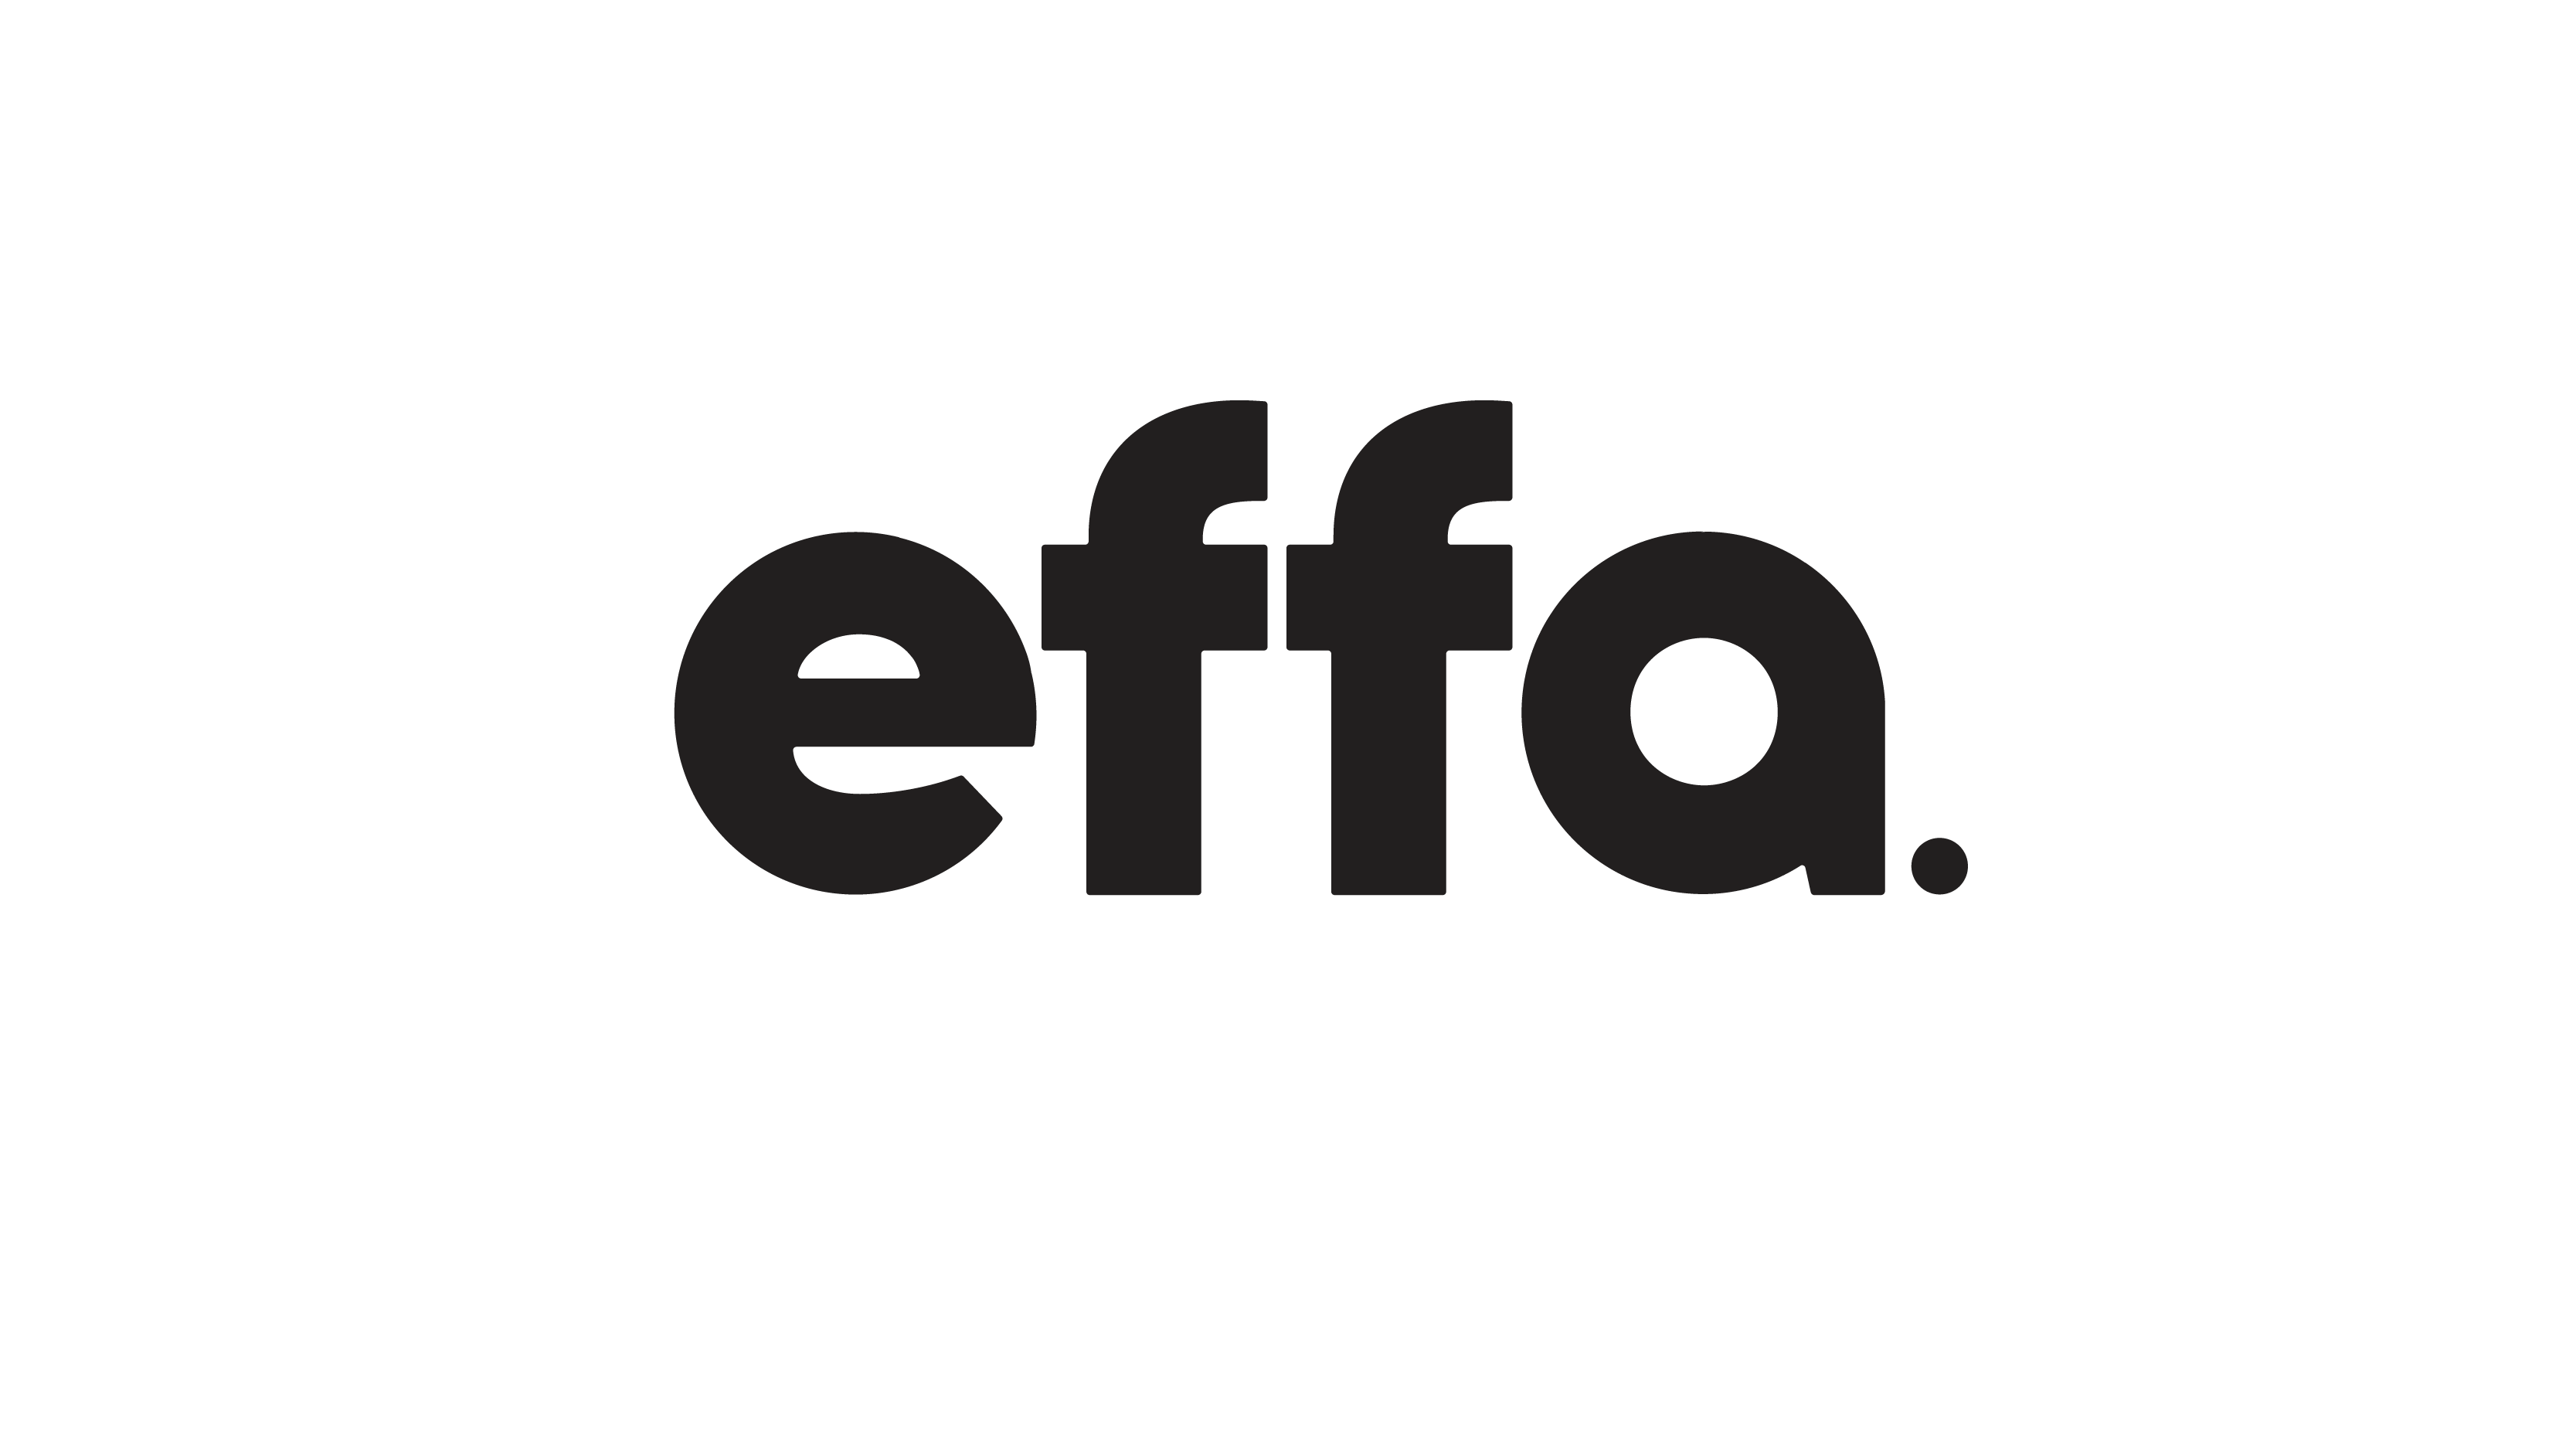 effa - Crunchbase Company Profile & Funding